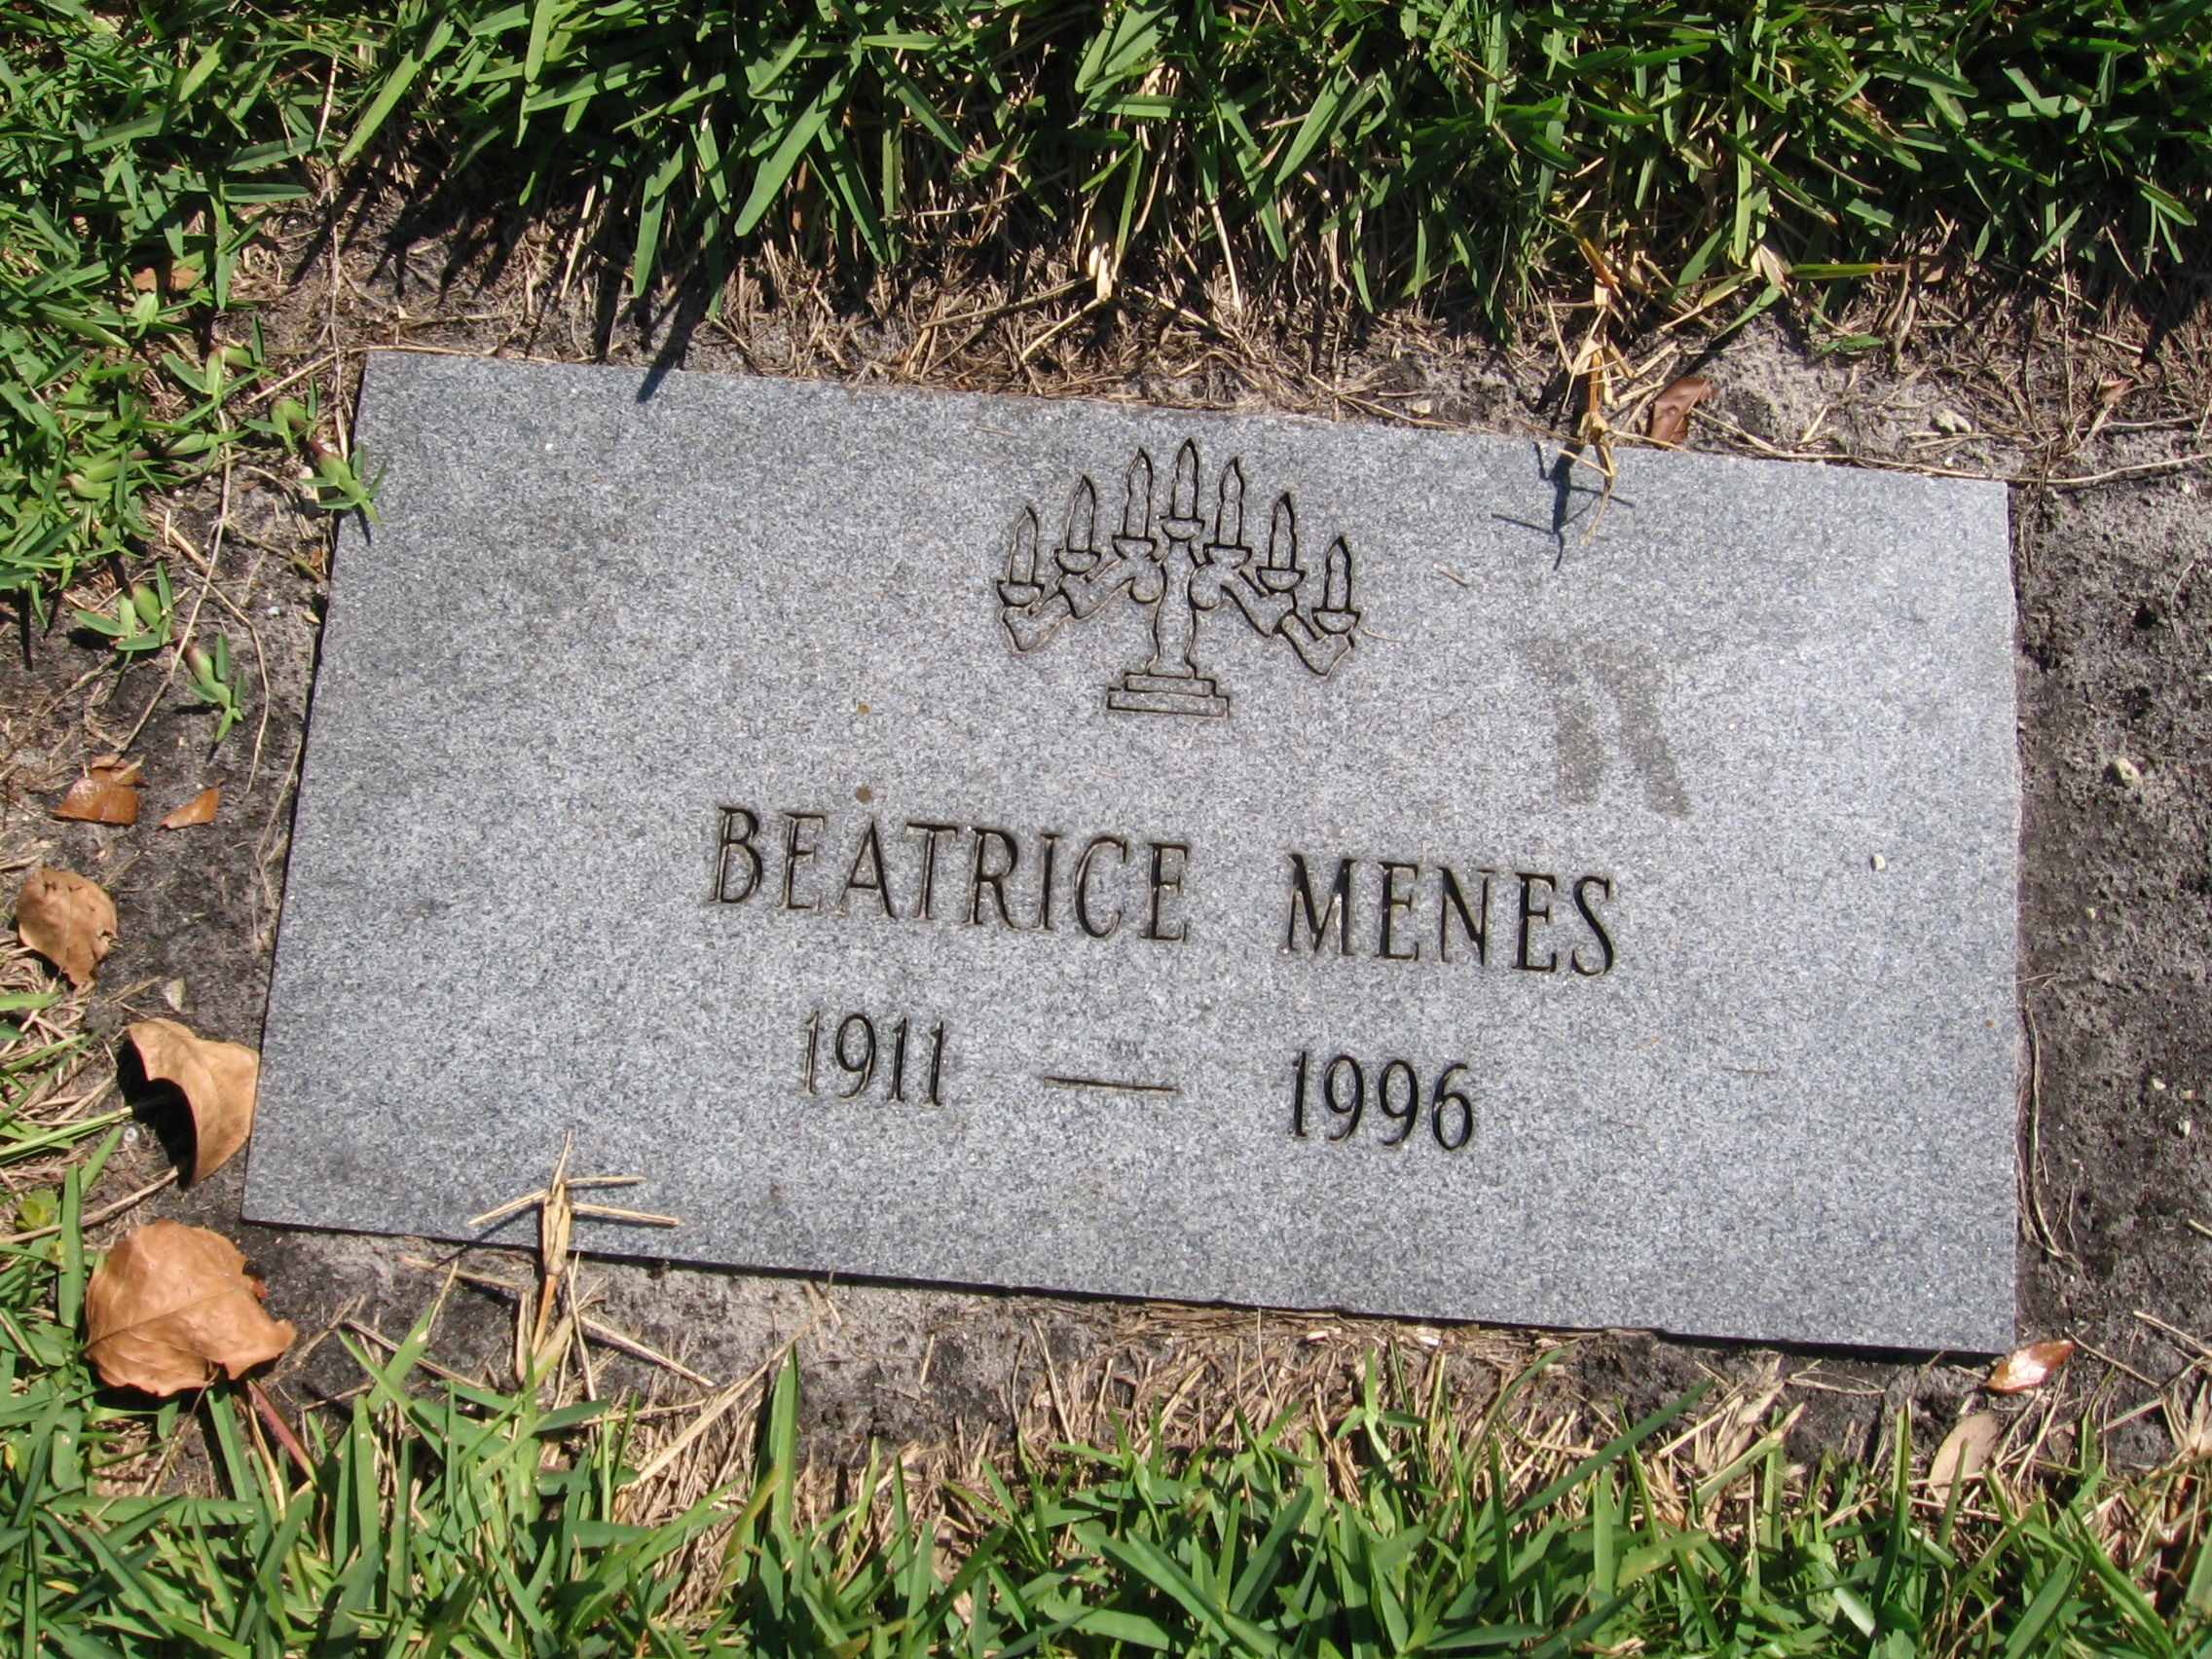 Beatrice Menes